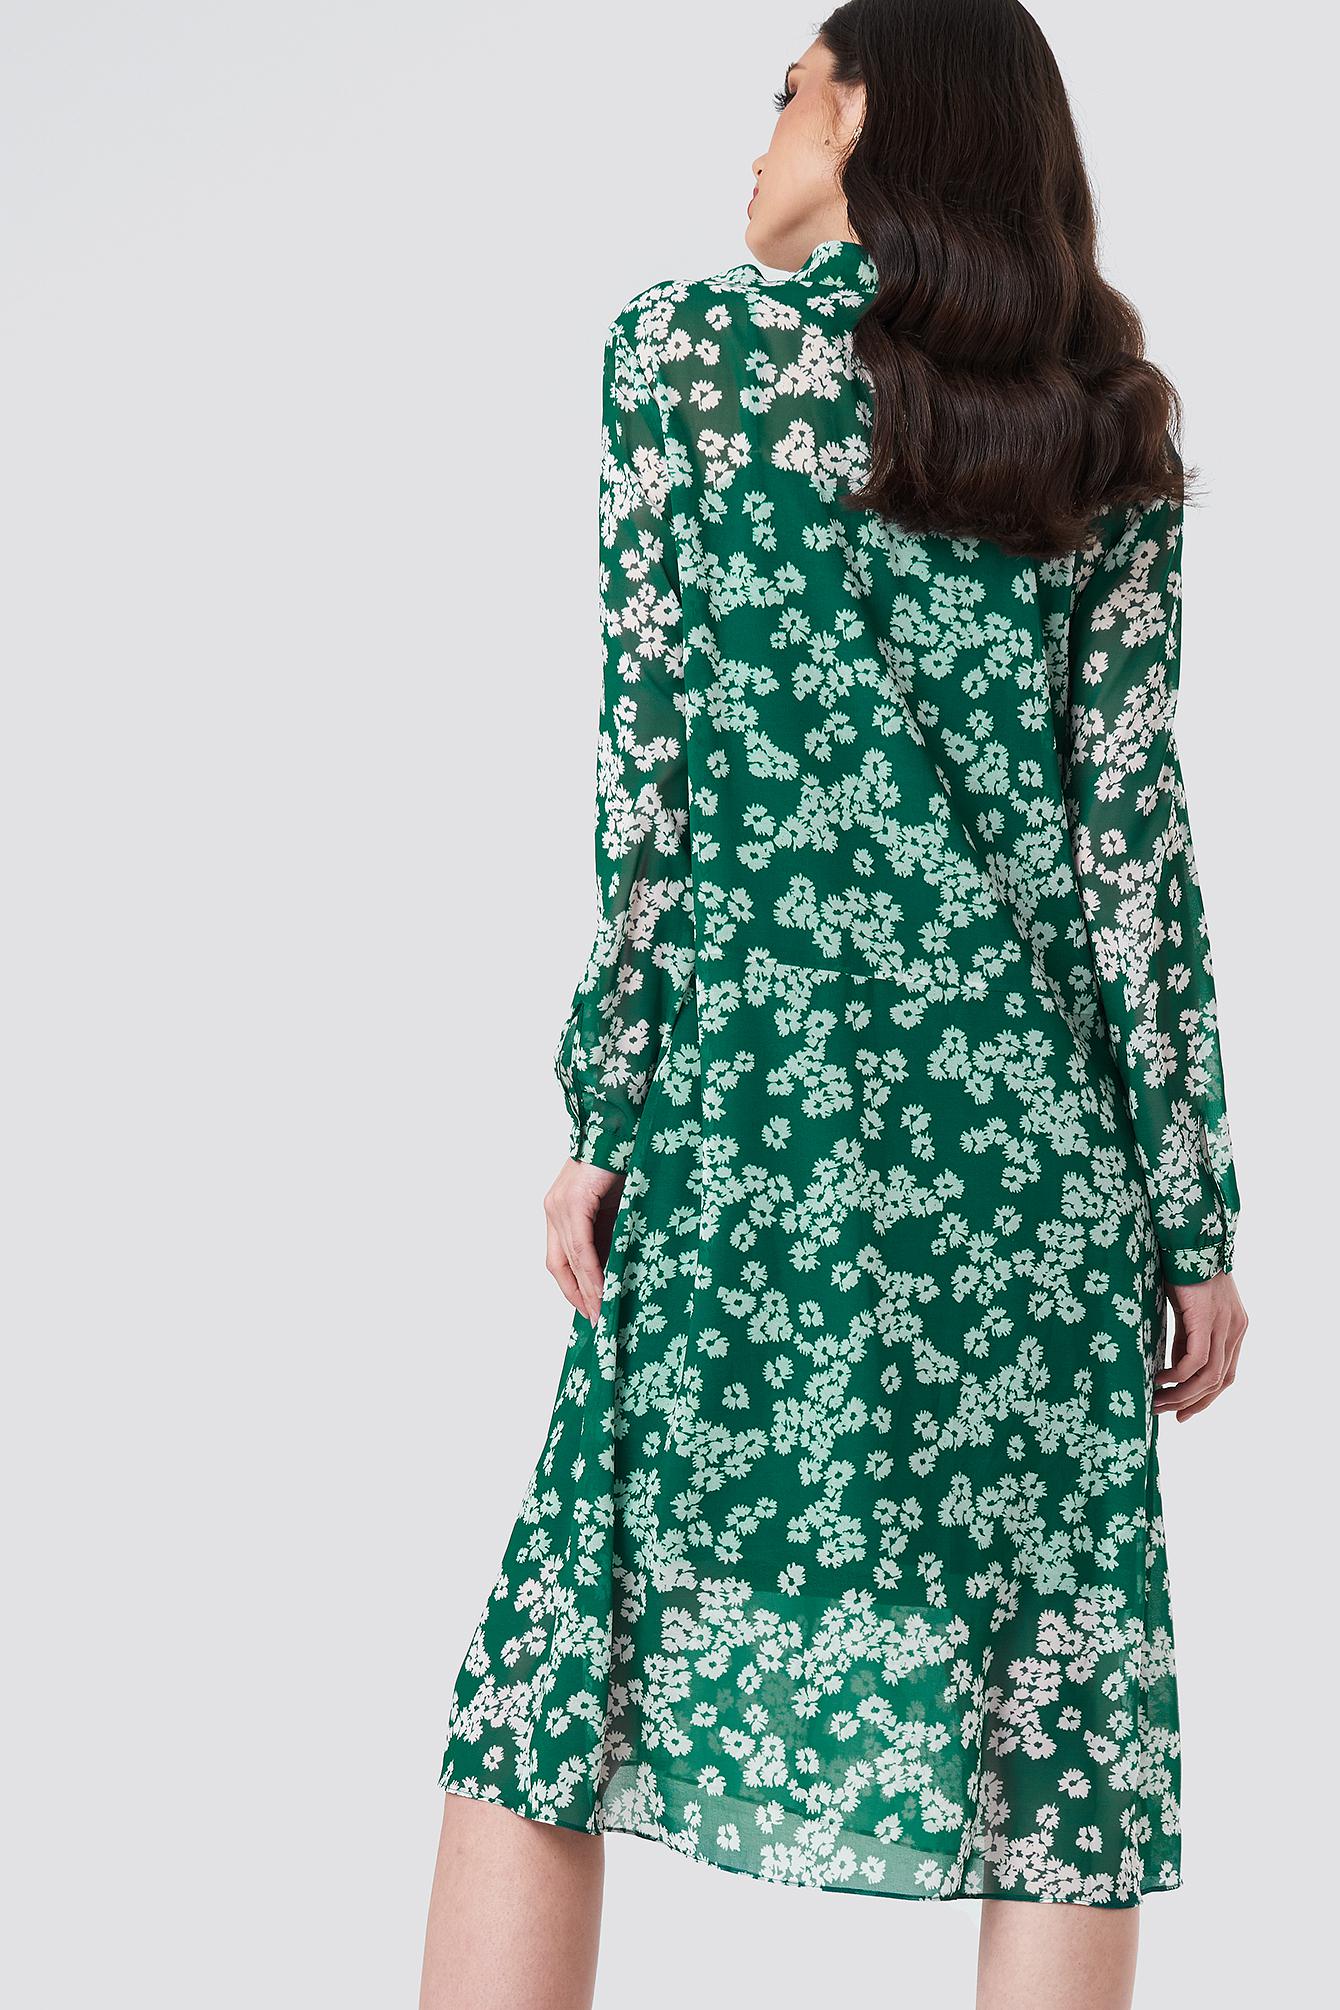 Samsøe & Samsøe Synthetic Merritt Ls Dress Aop Daisy in Green - Lyst